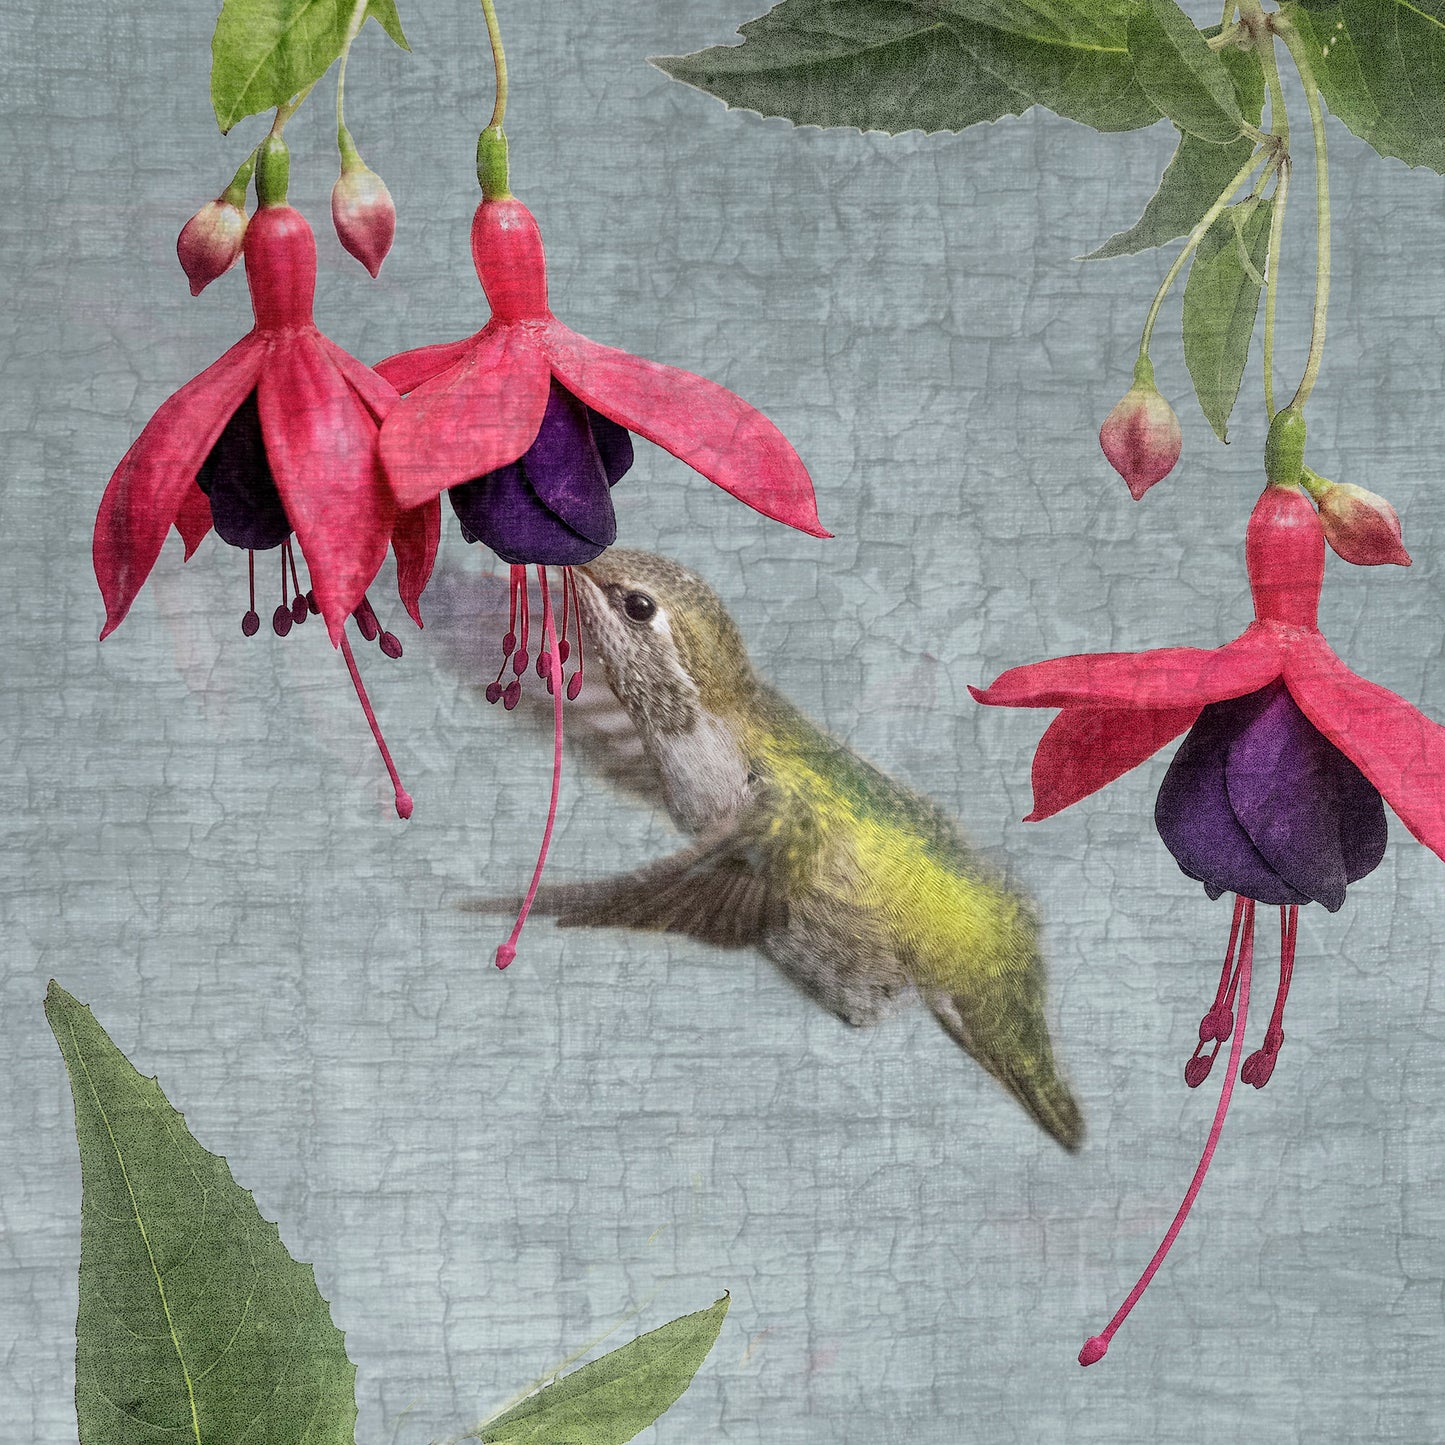 Hummingbird peeks into fuchsia blossoms.